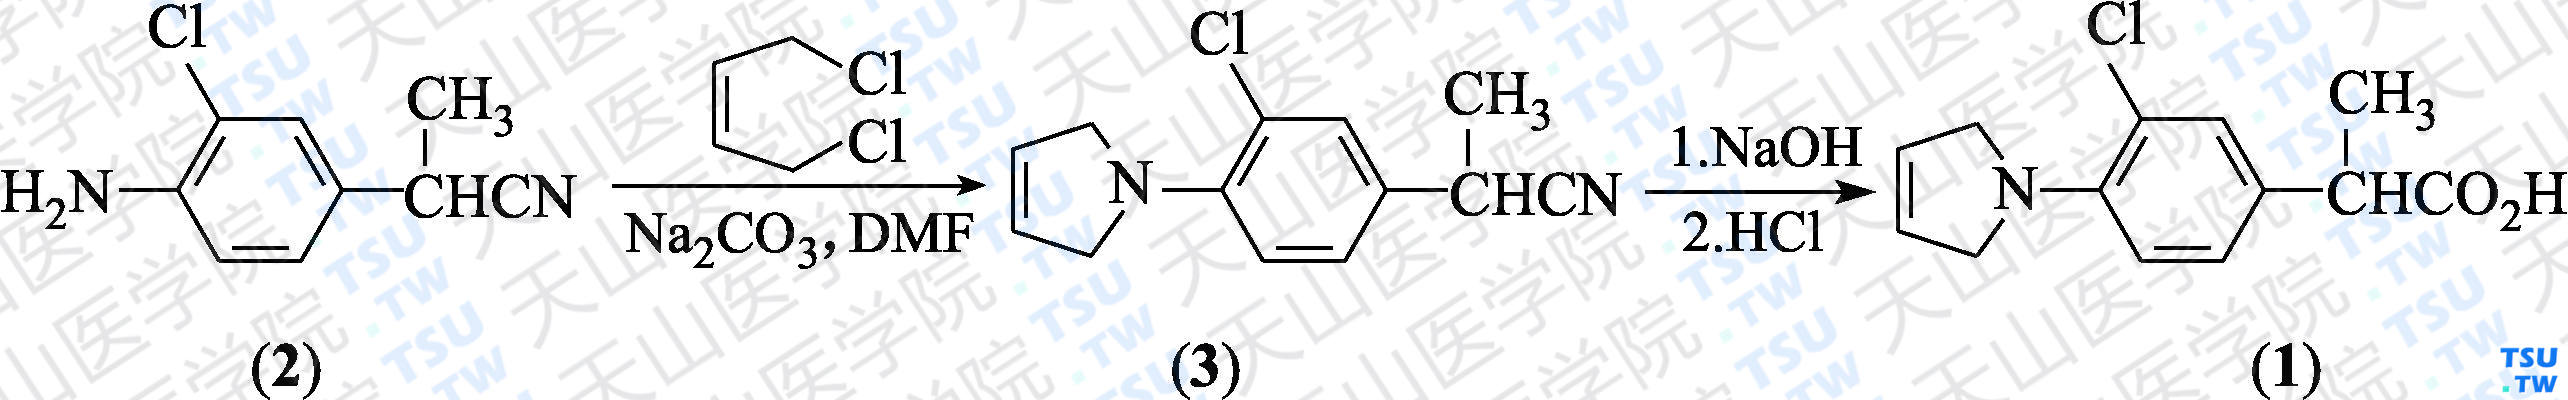 吡洛芬（分子式：C<sub>13</sub>H<sub>14</sub>ClNO<sub>2</sub>）的合成方法路线及其结构式